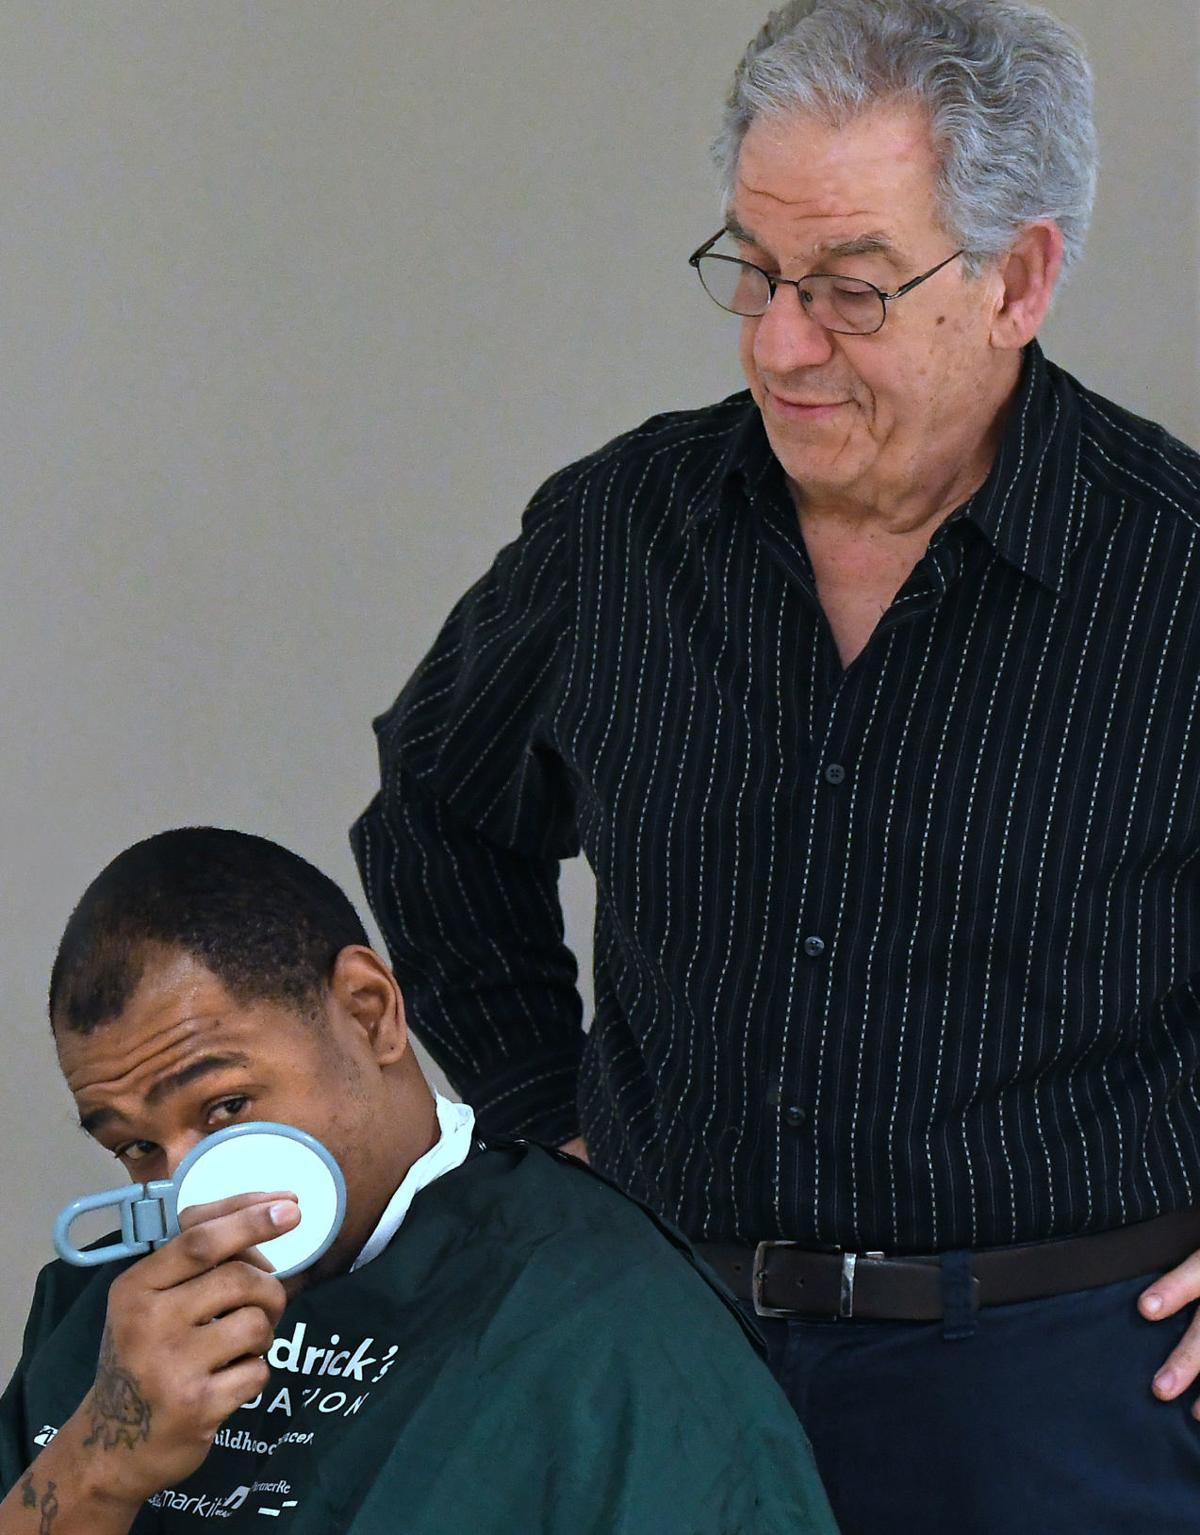 Barber behind bars: Auburn's 'Mr. Paul' cuts hair at county jail